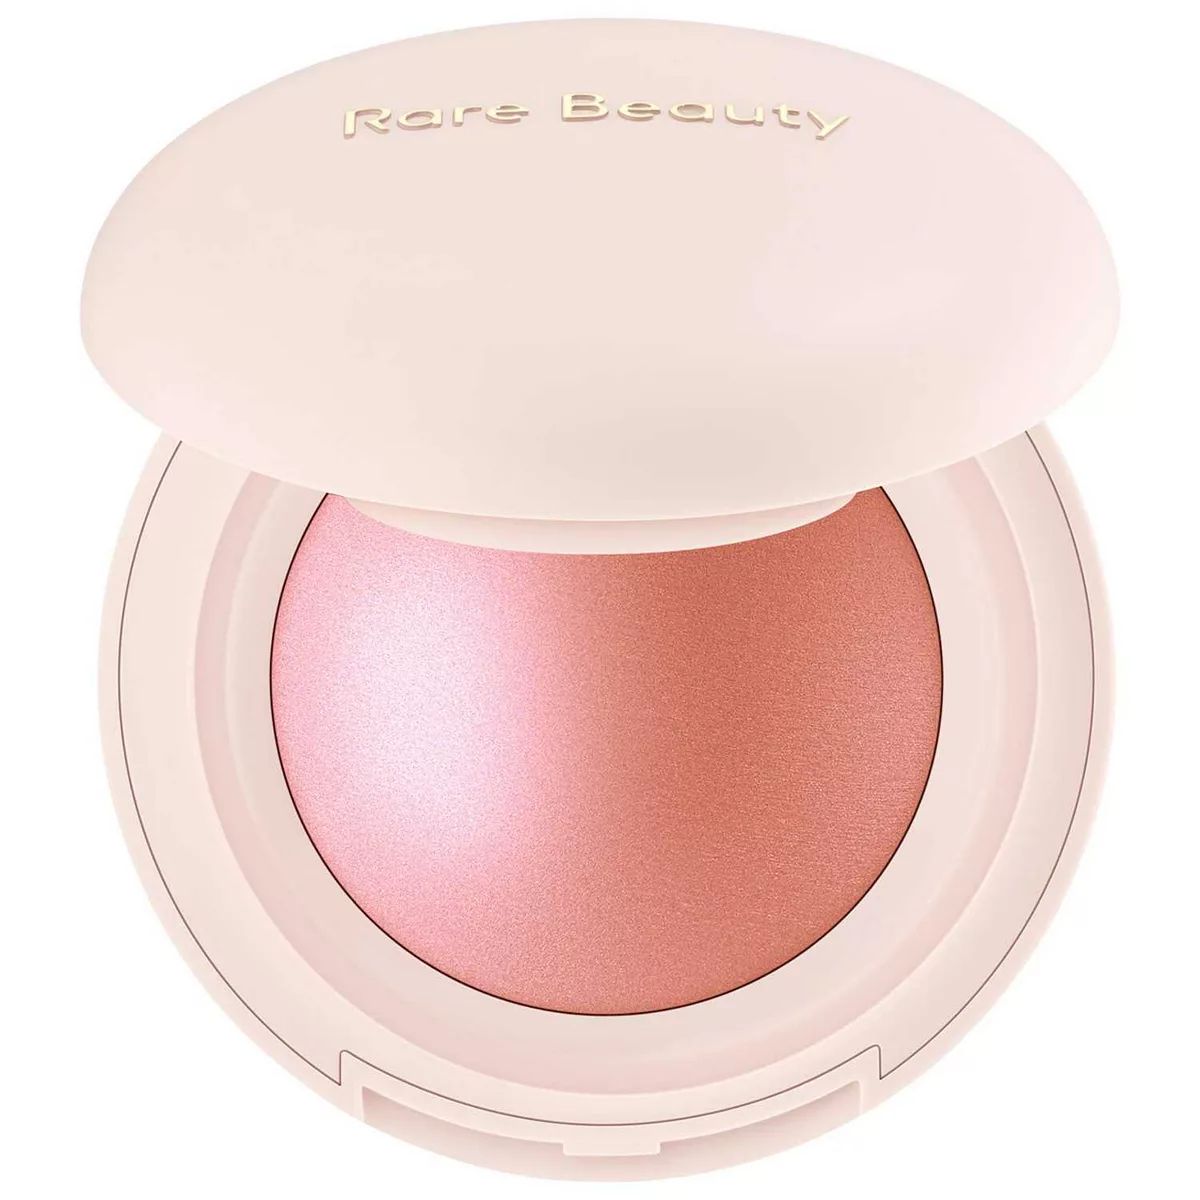 Rare Beauty by Selena Gomez Soft Pinch Luminous Powder Blush | Kohl's